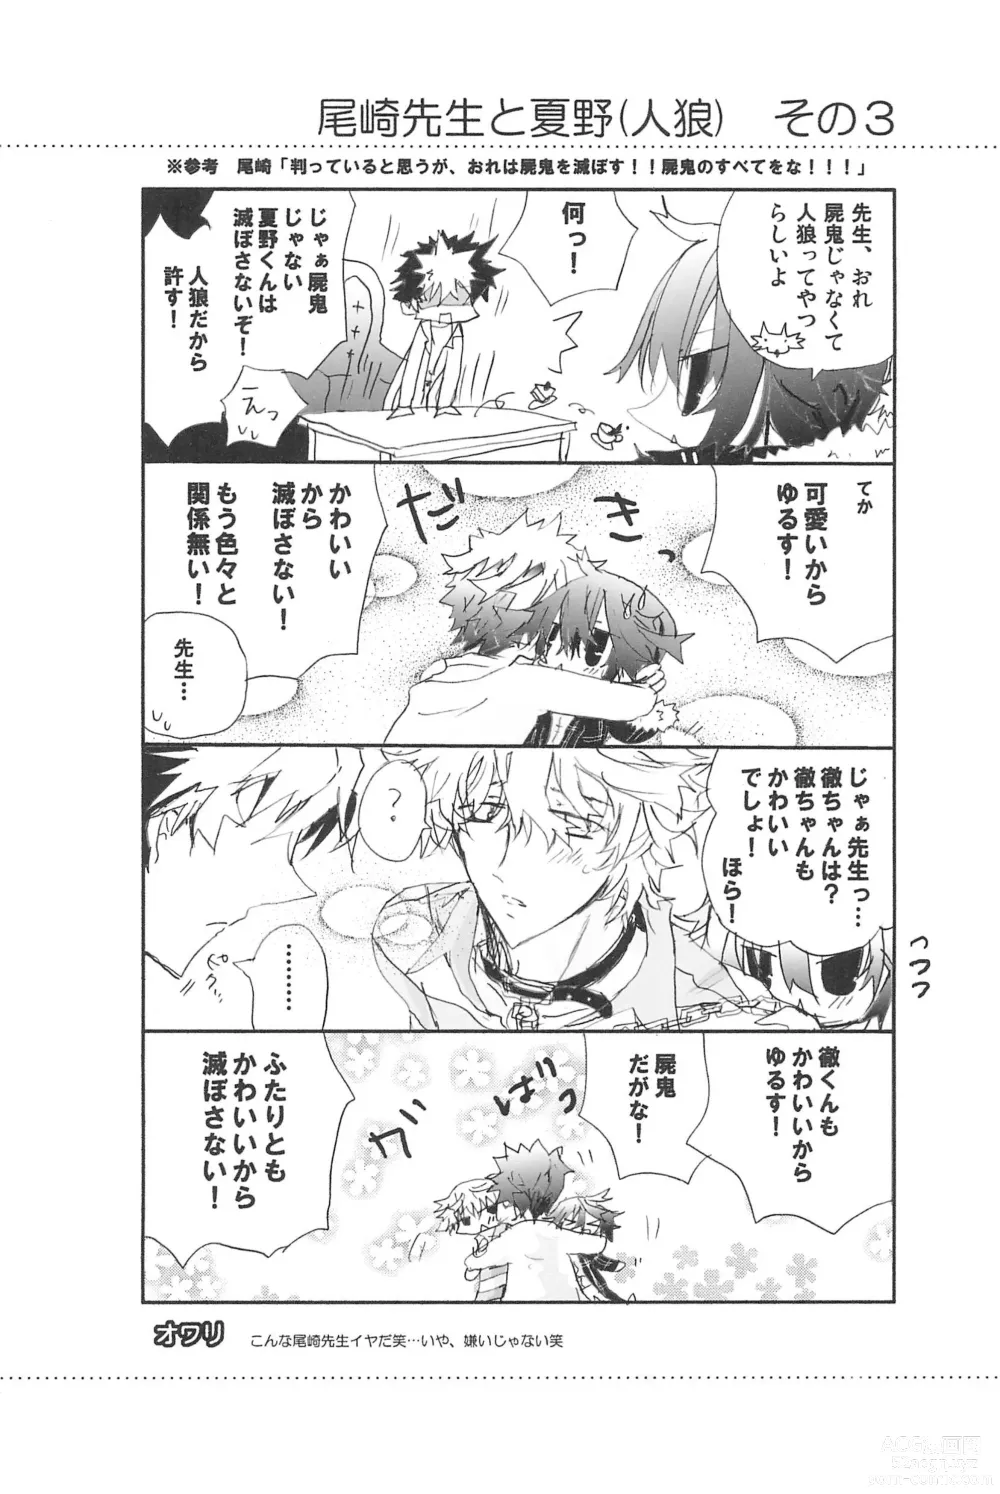 Page 20 of doujinshi Shiki-hon 10